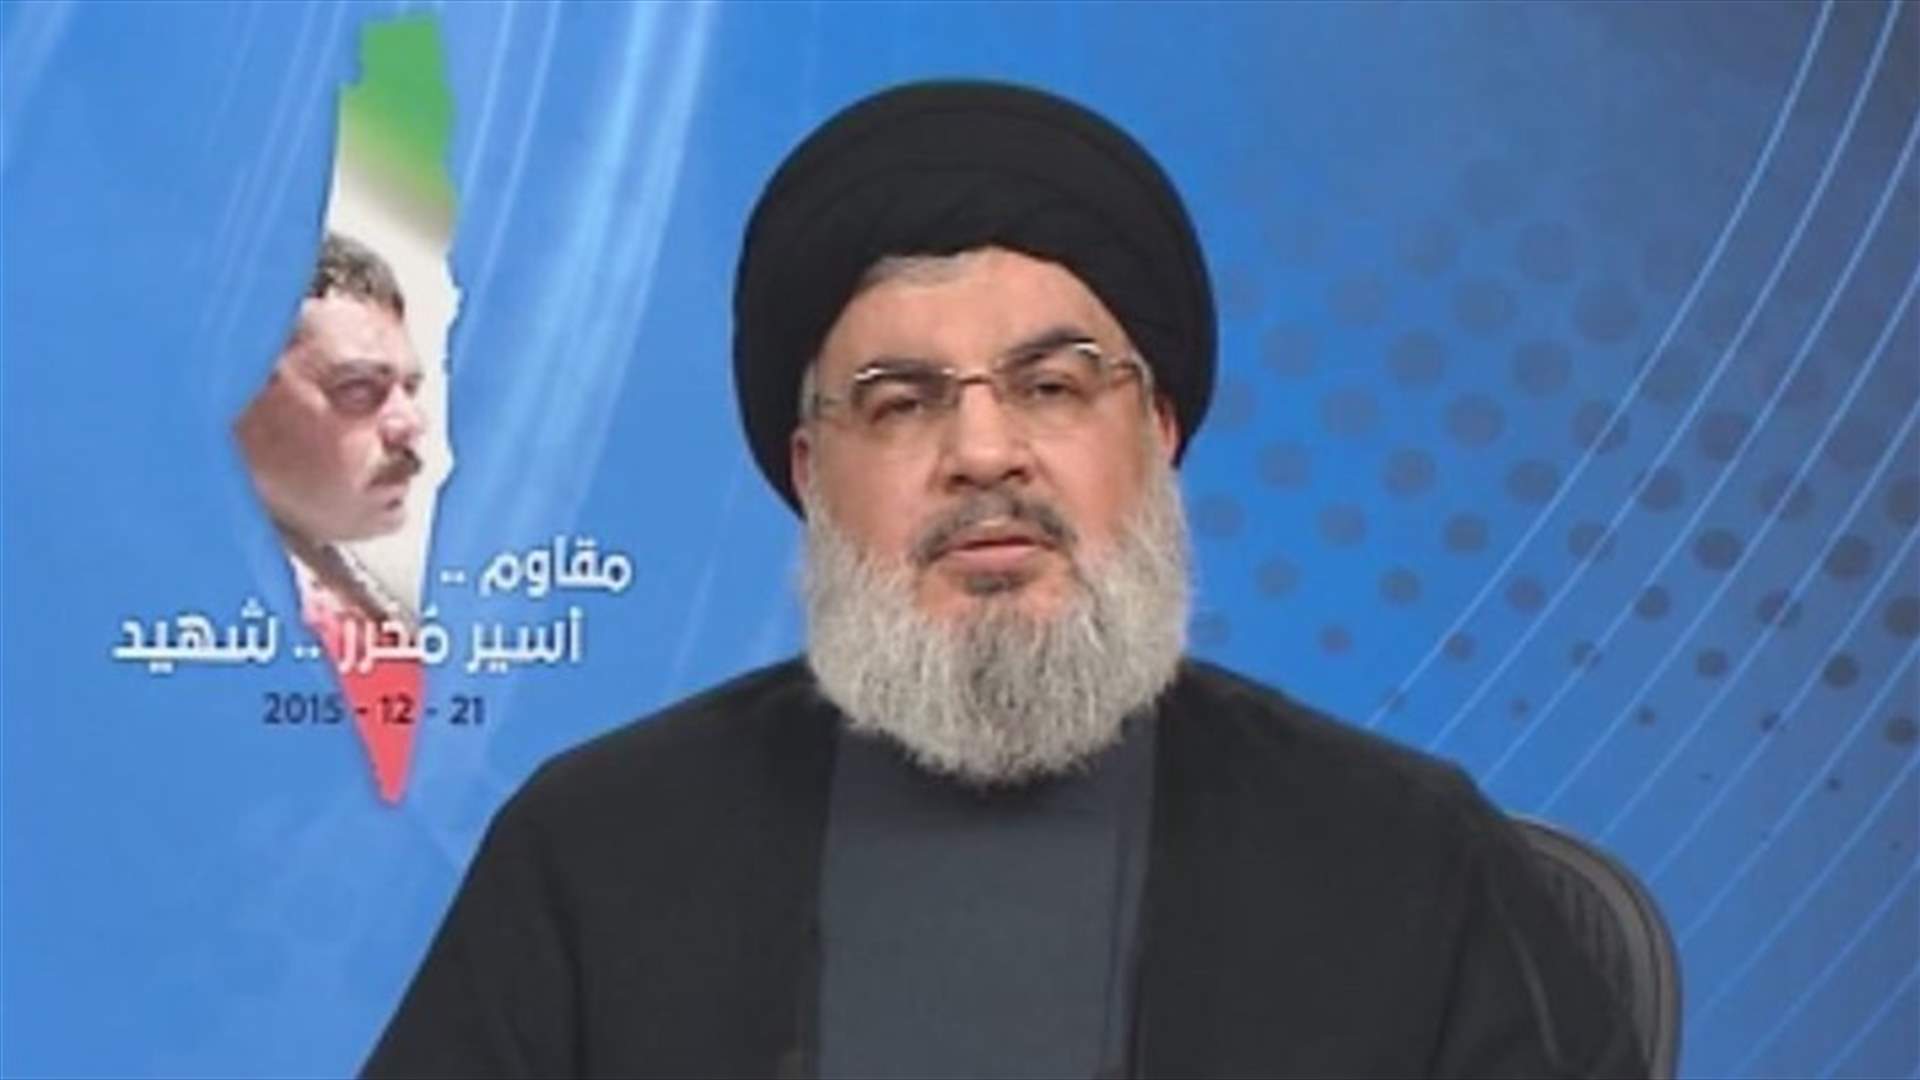 Nasrallah says Israel behind Qantar’s assassination, vows retaliation  